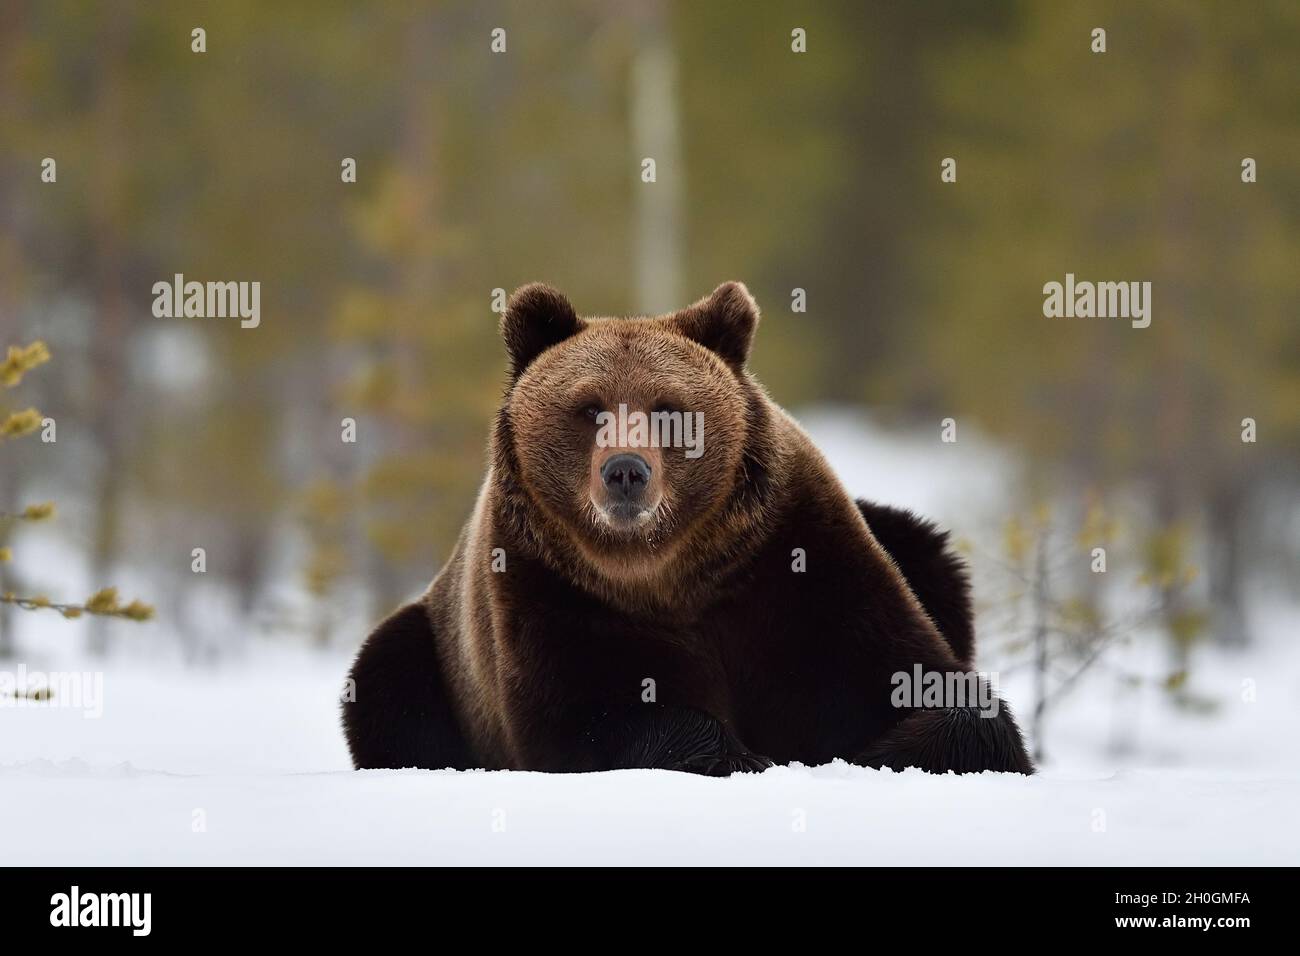 Brown bear on snow Stock Photo